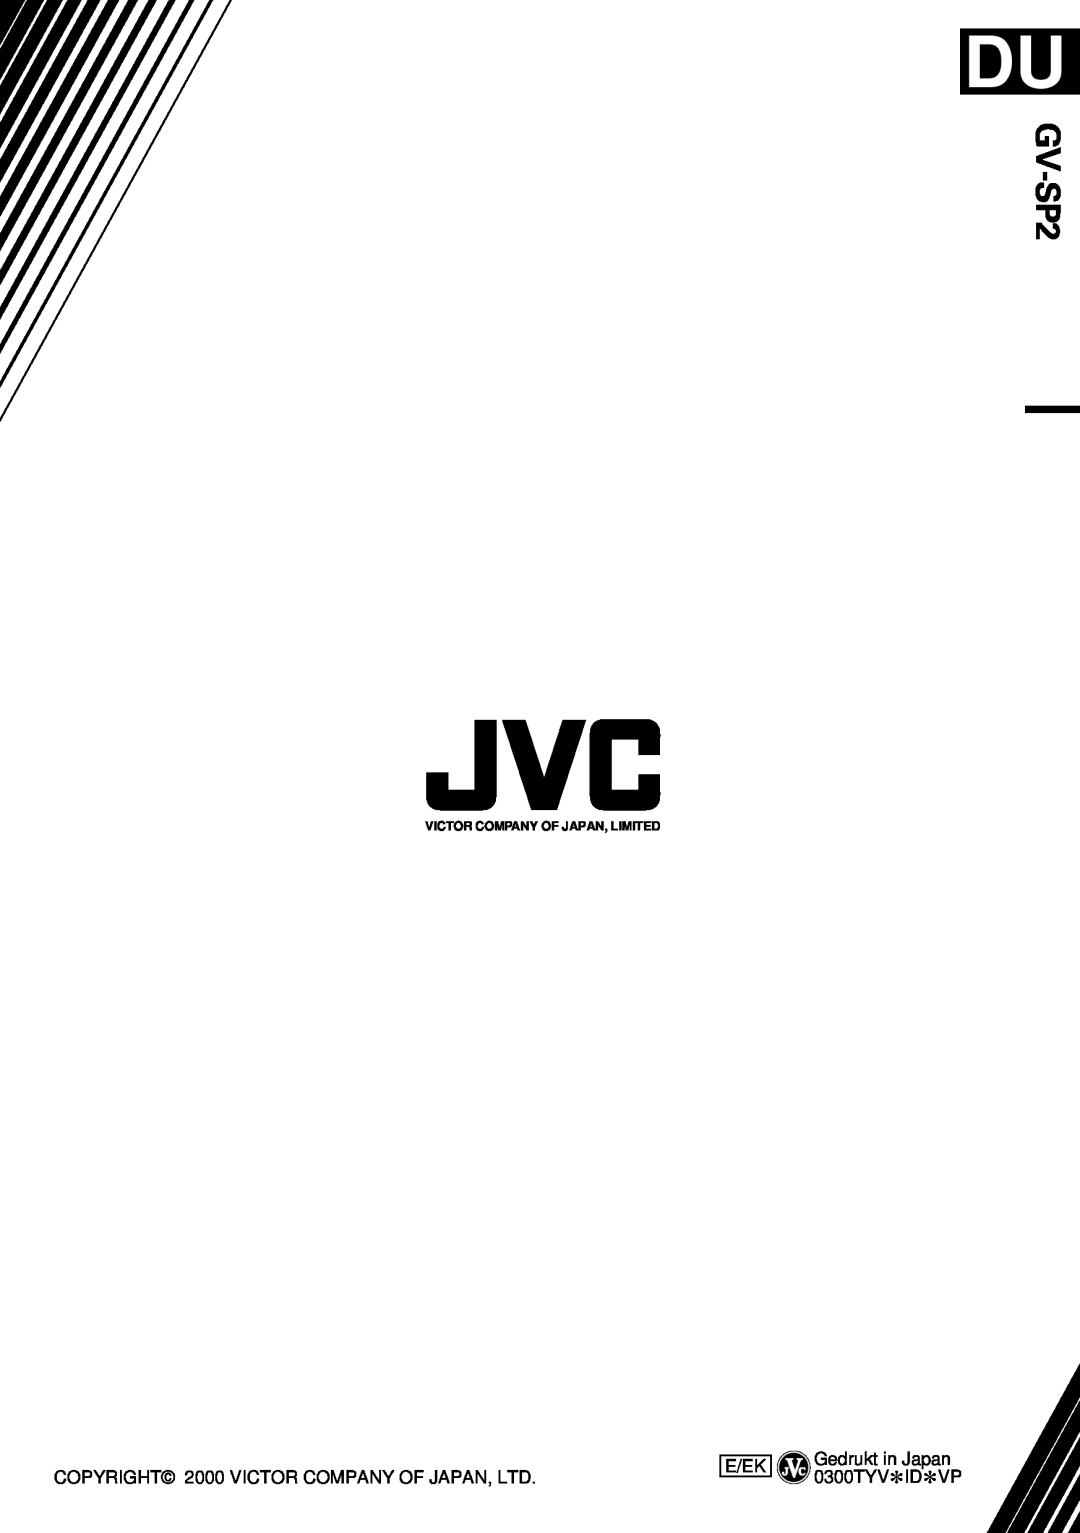 JVC GV-SP2 manual E/Ek, Gedrukt in Japan 0300TYV*ID*VP, Victor Company Of Japan, Limited 